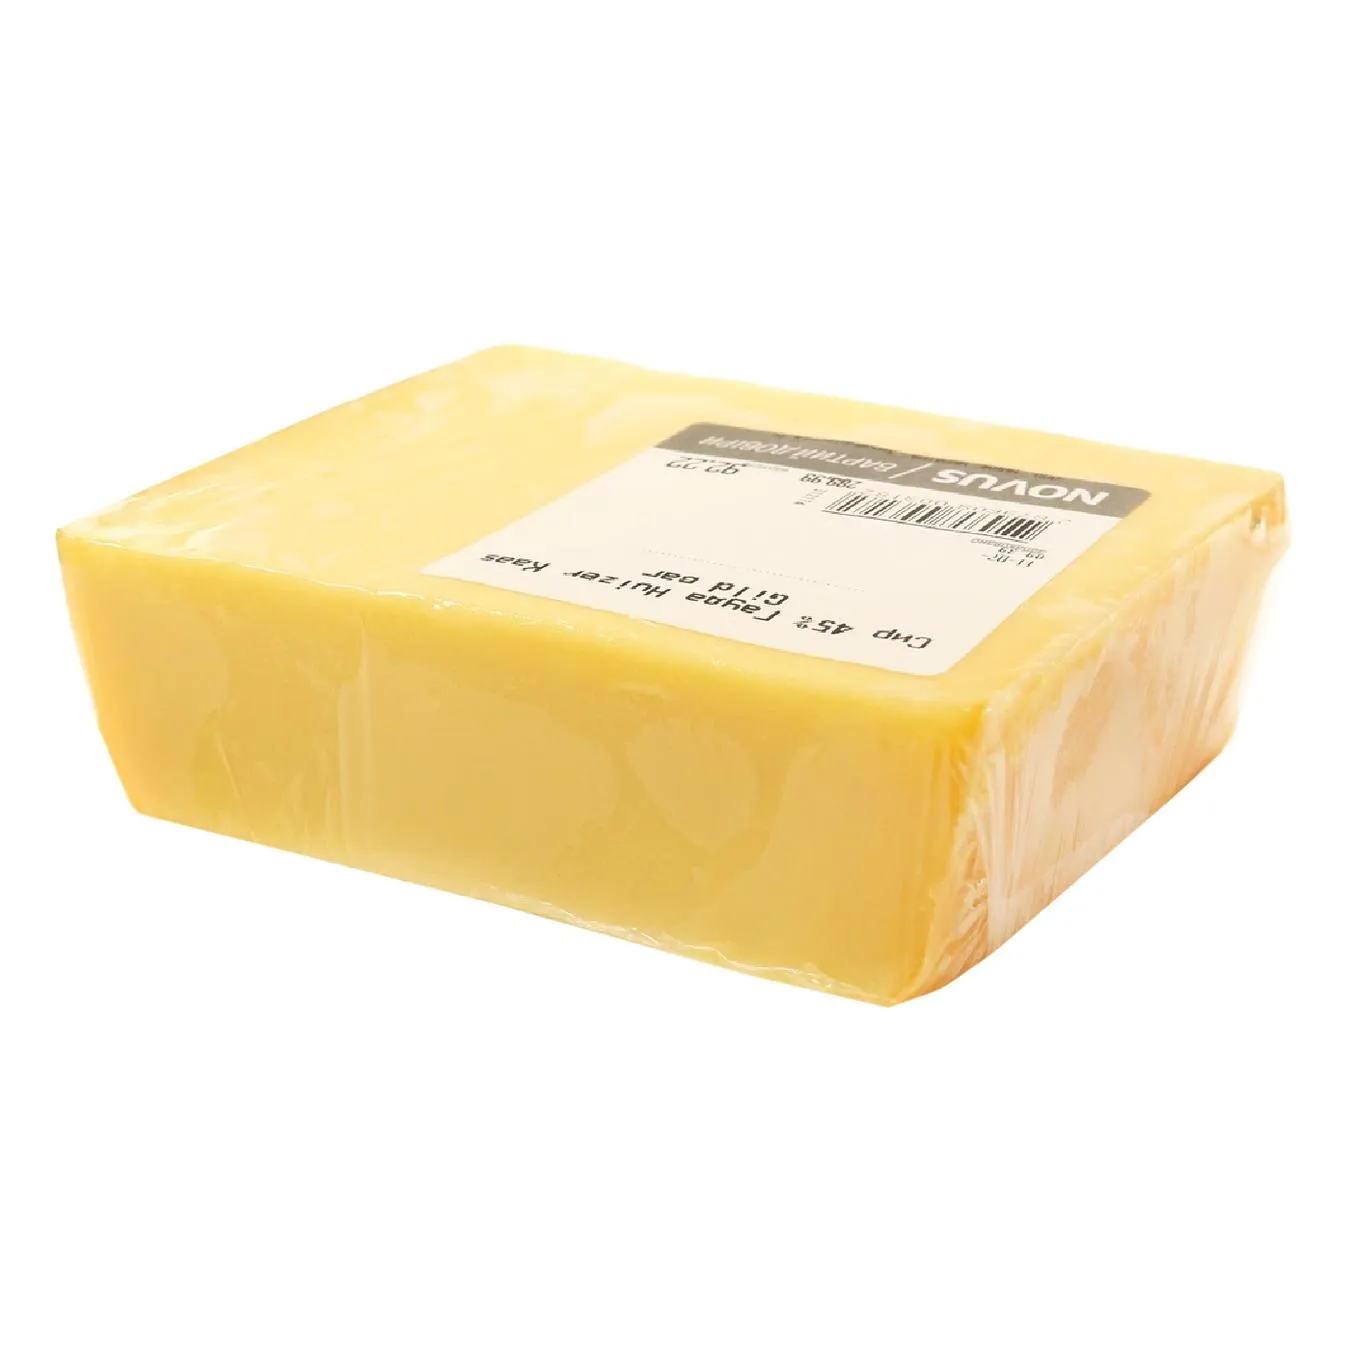 Huizer Kaas Gild Gouda cheese 45%